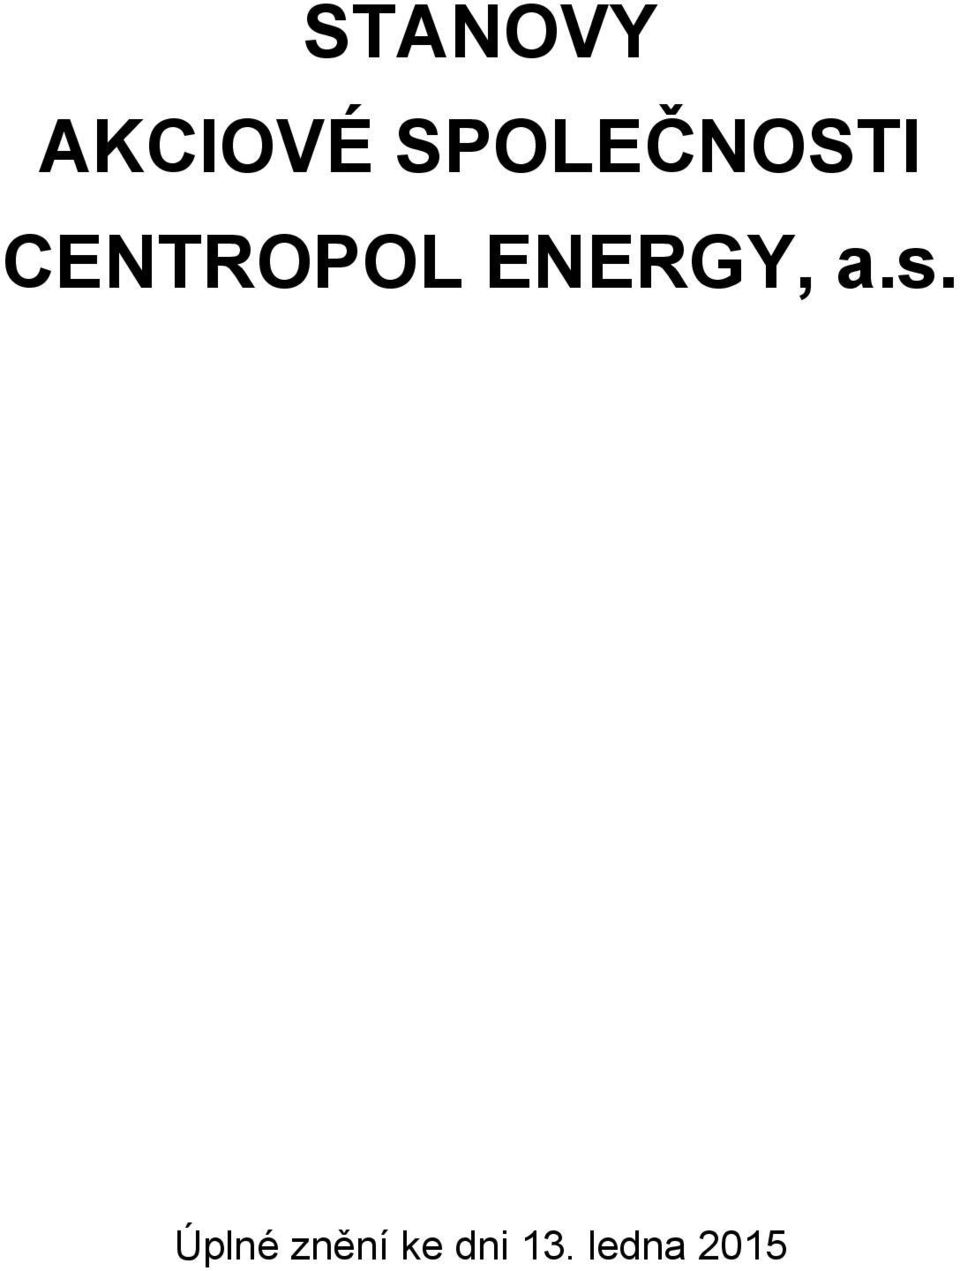 CENTROPOL ENERGY, a.